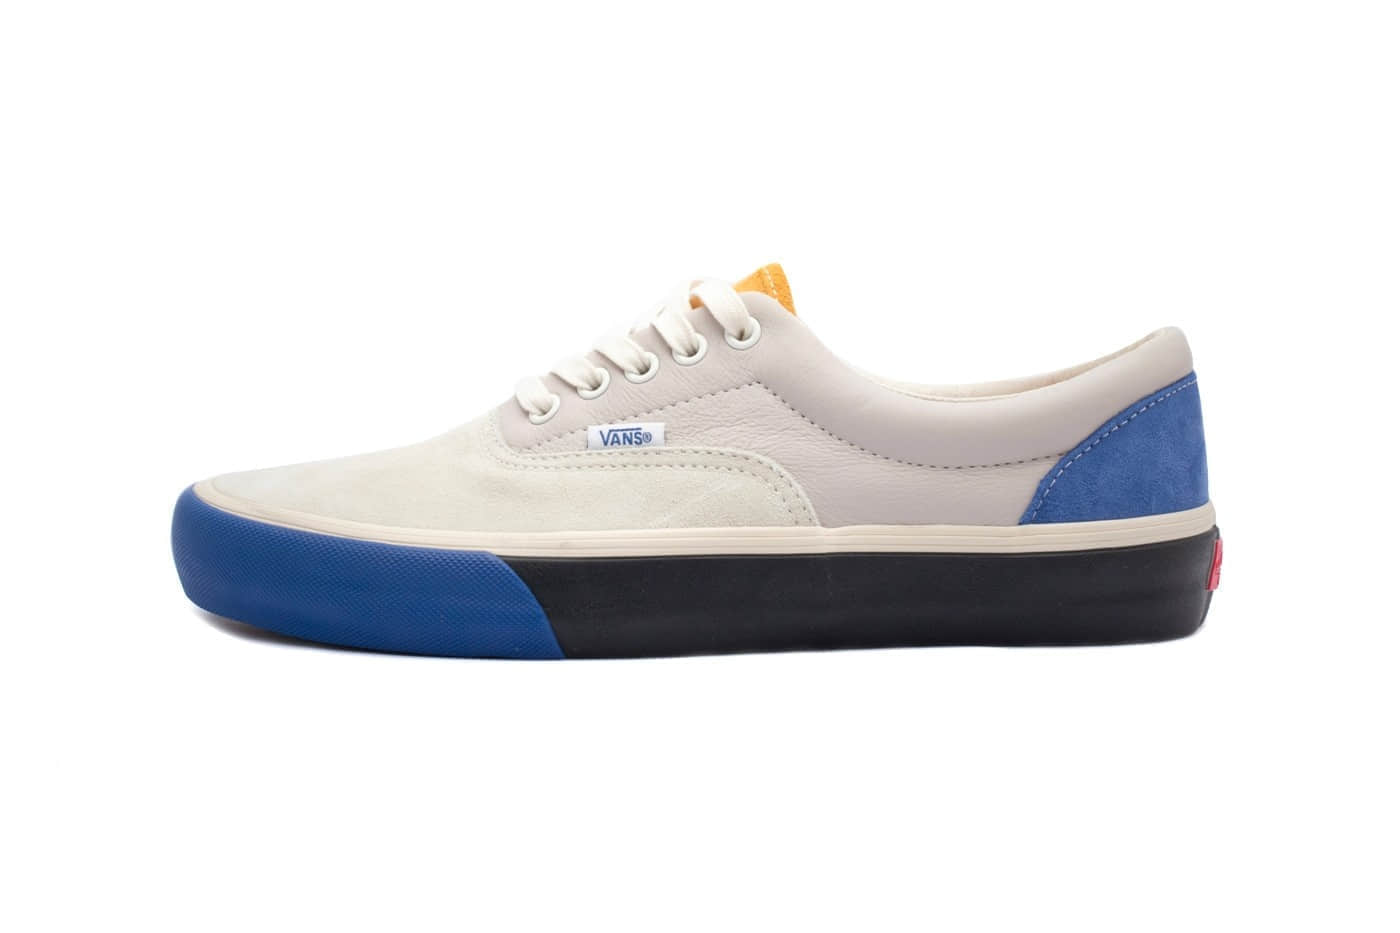 Vans Vault Era VLT LX 'Blue White' Sneakers - Limited Edition